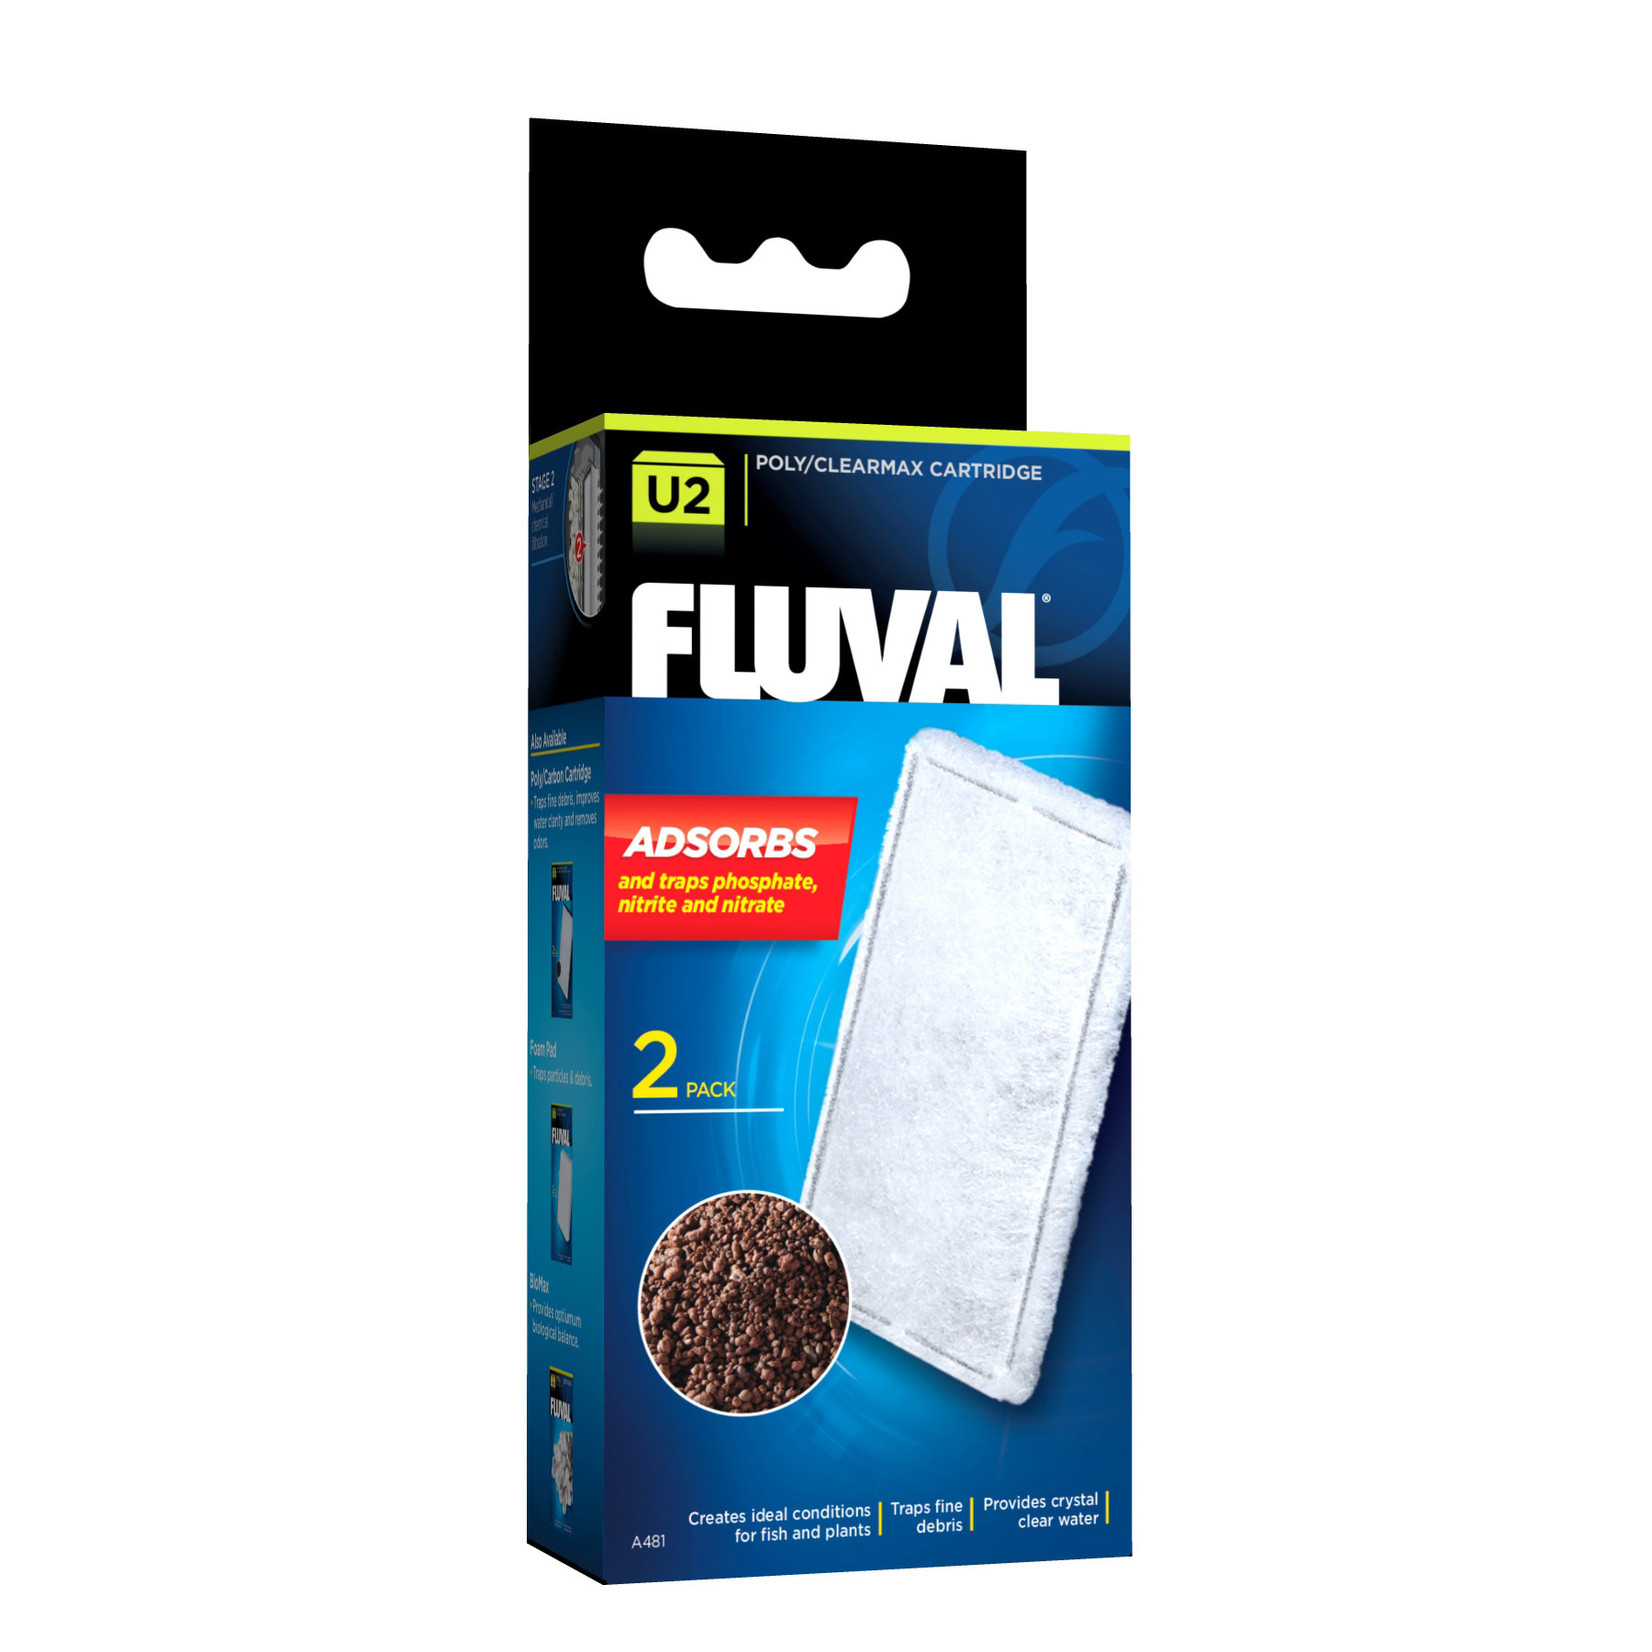 FLUVAL Fluval U2 Filter Media - Poly/Clearmax Cartridge - 2-pack